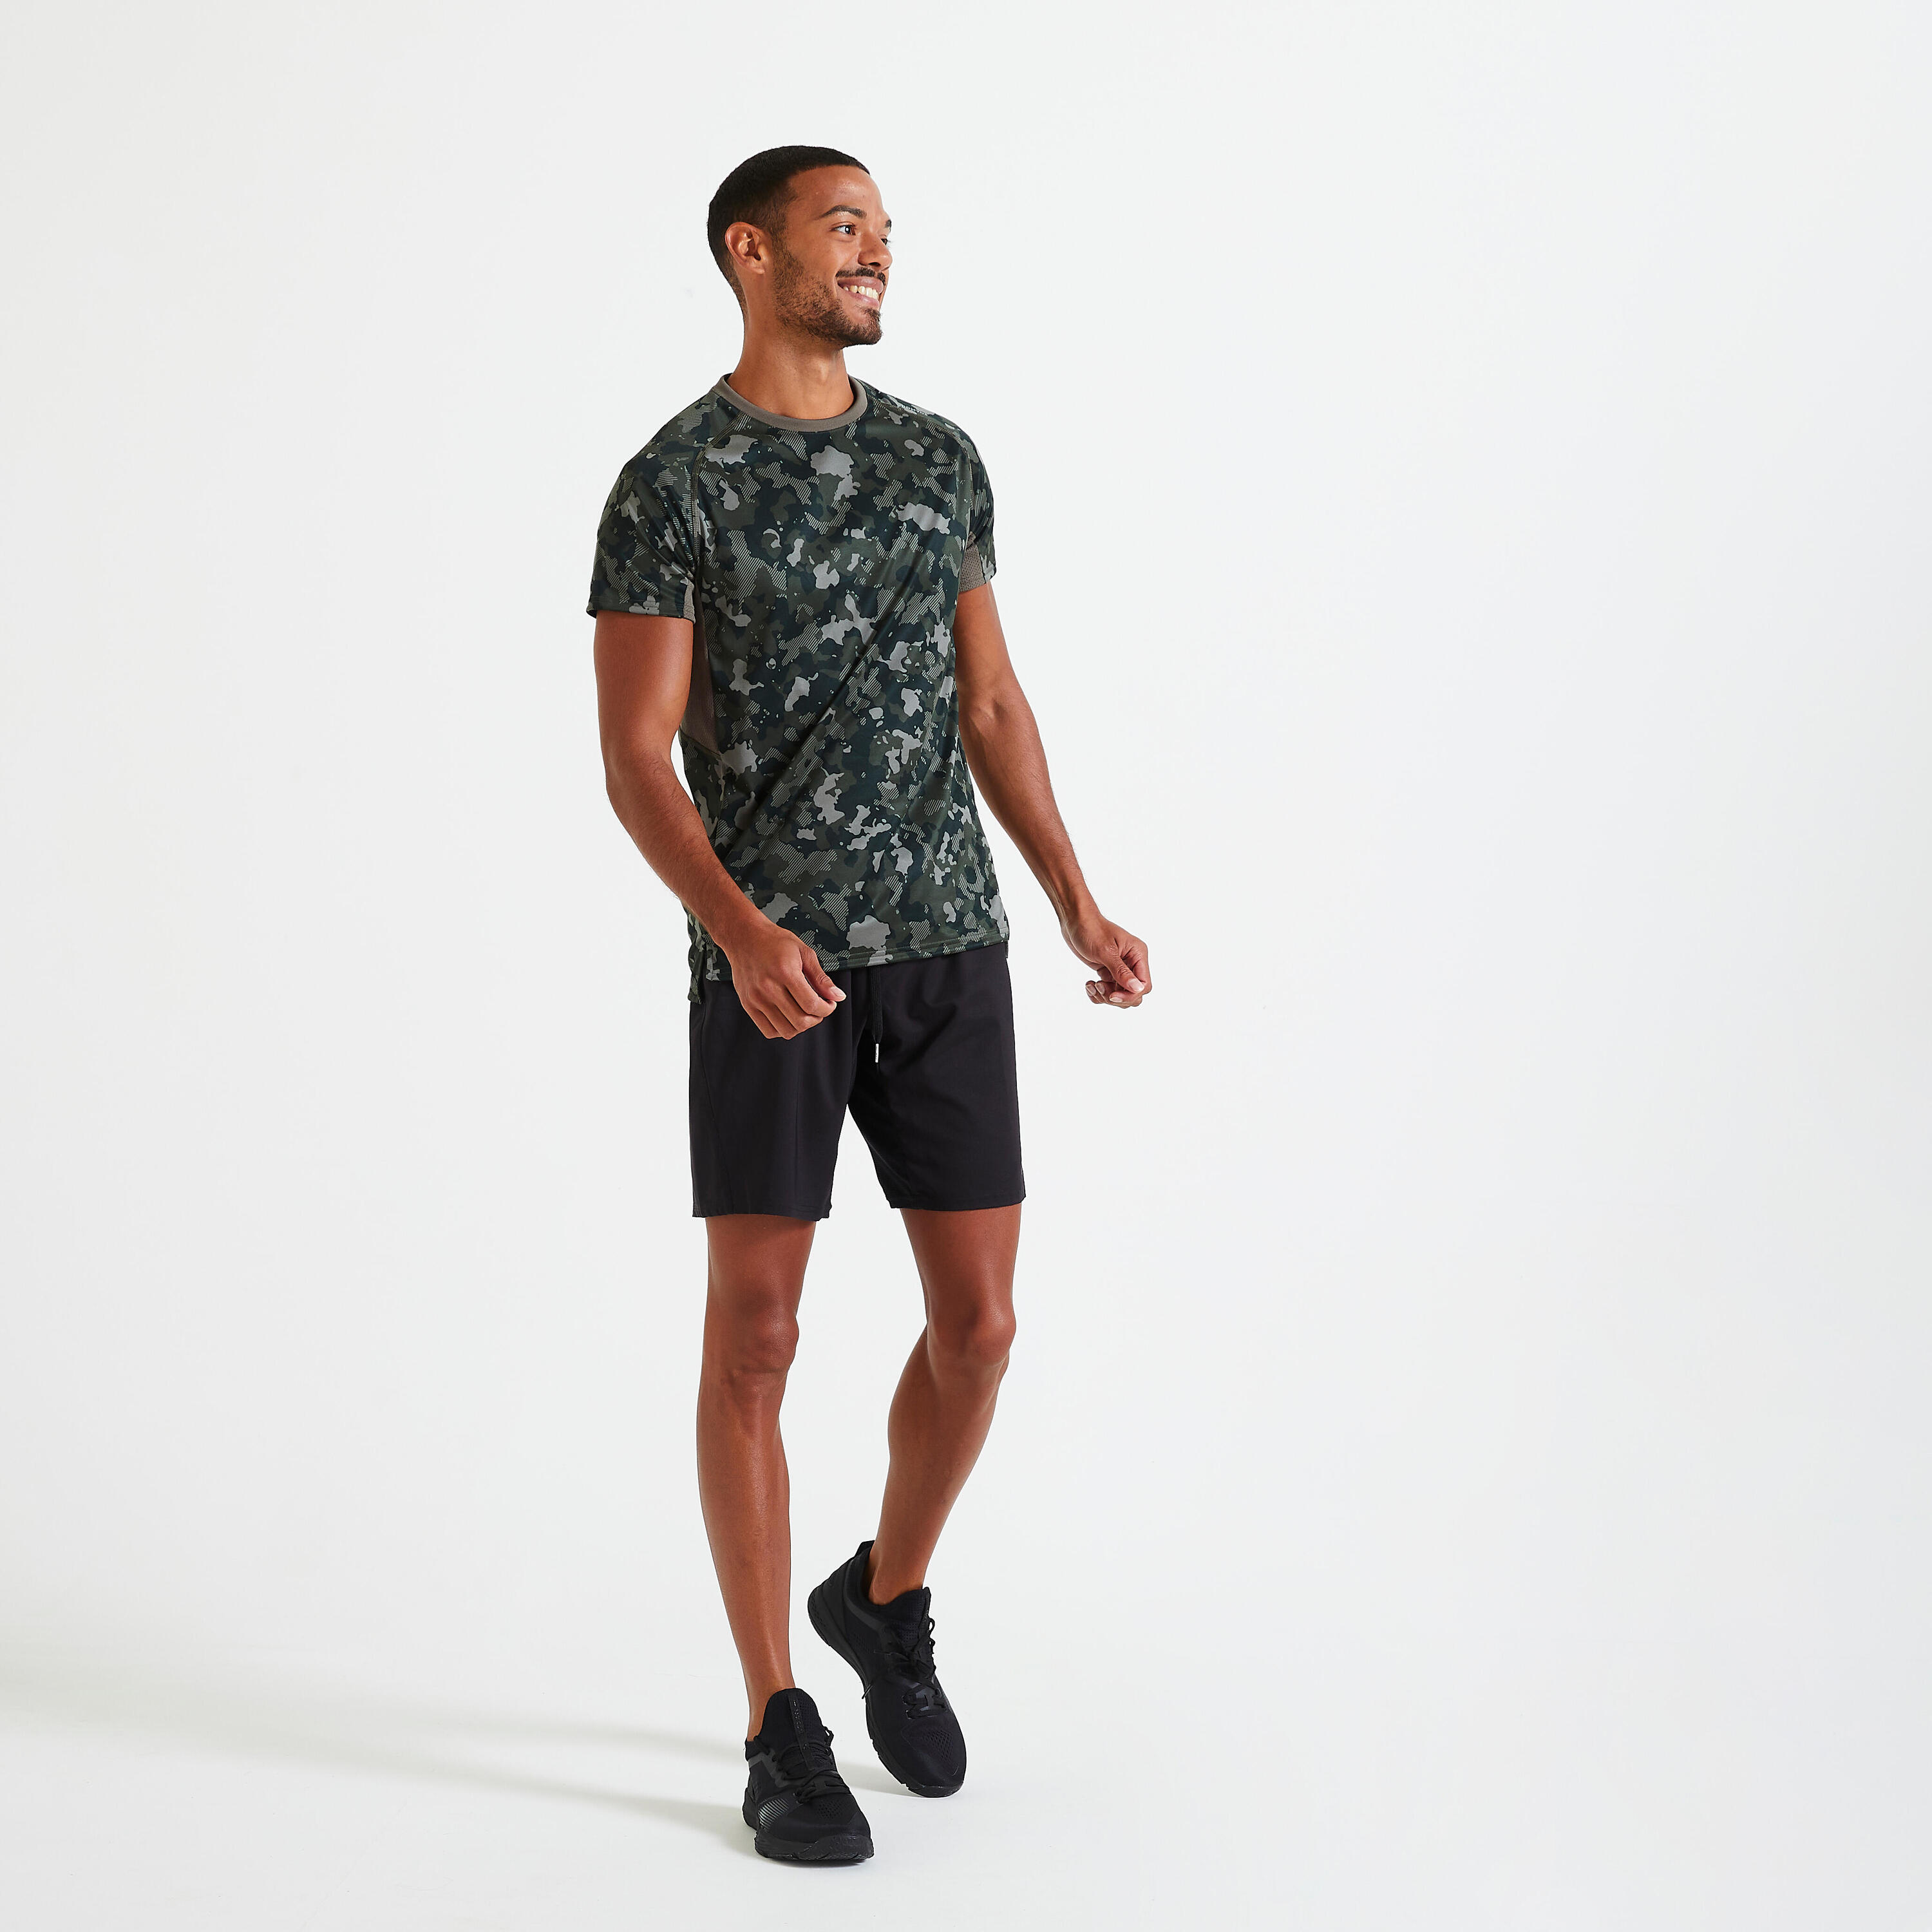 Technical Fitness T-Shirt - Grey Print/Camouflage/Khaki 2/5